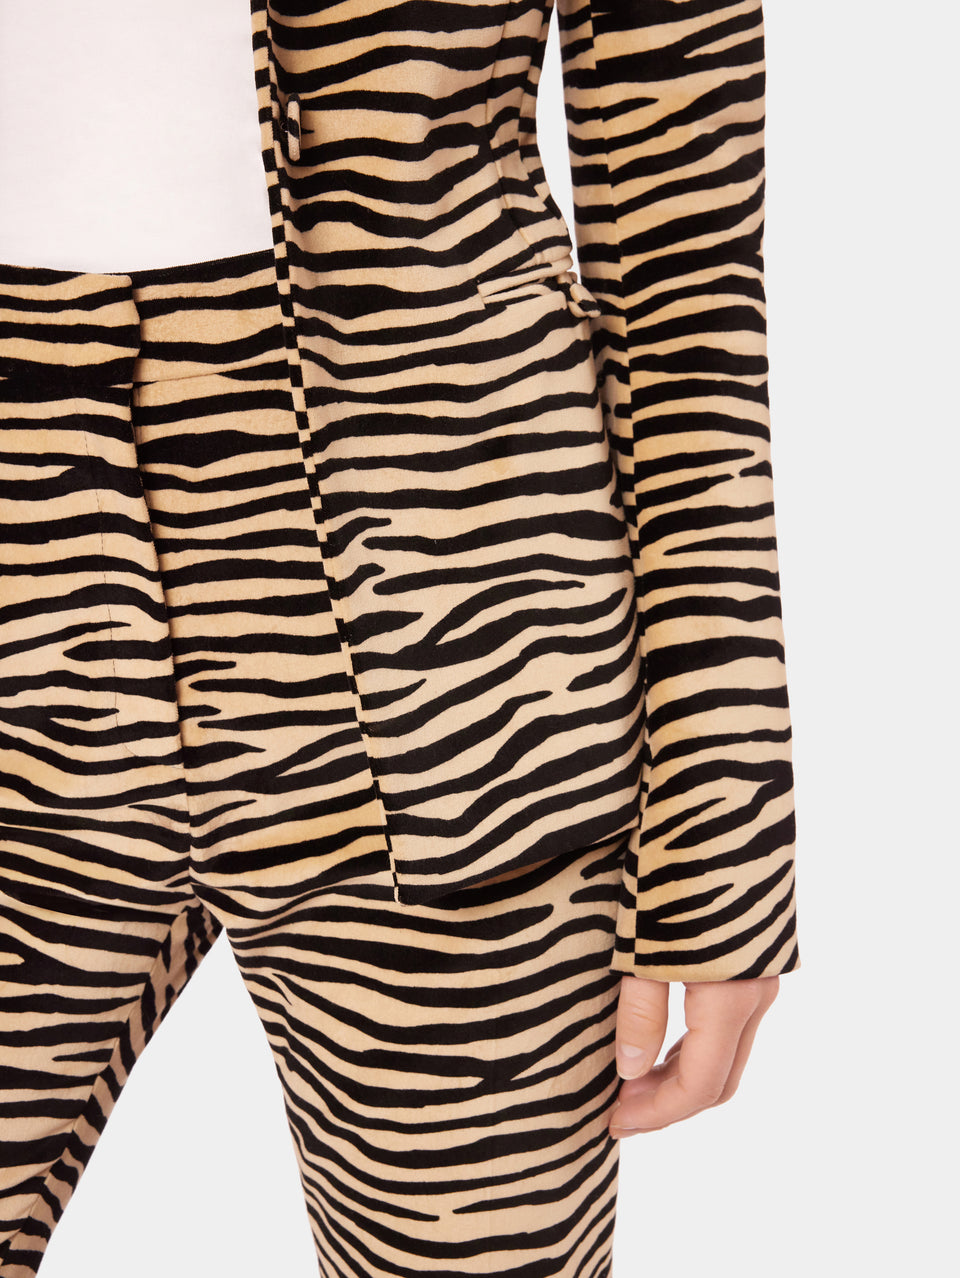 Pantalon imprimé tigre